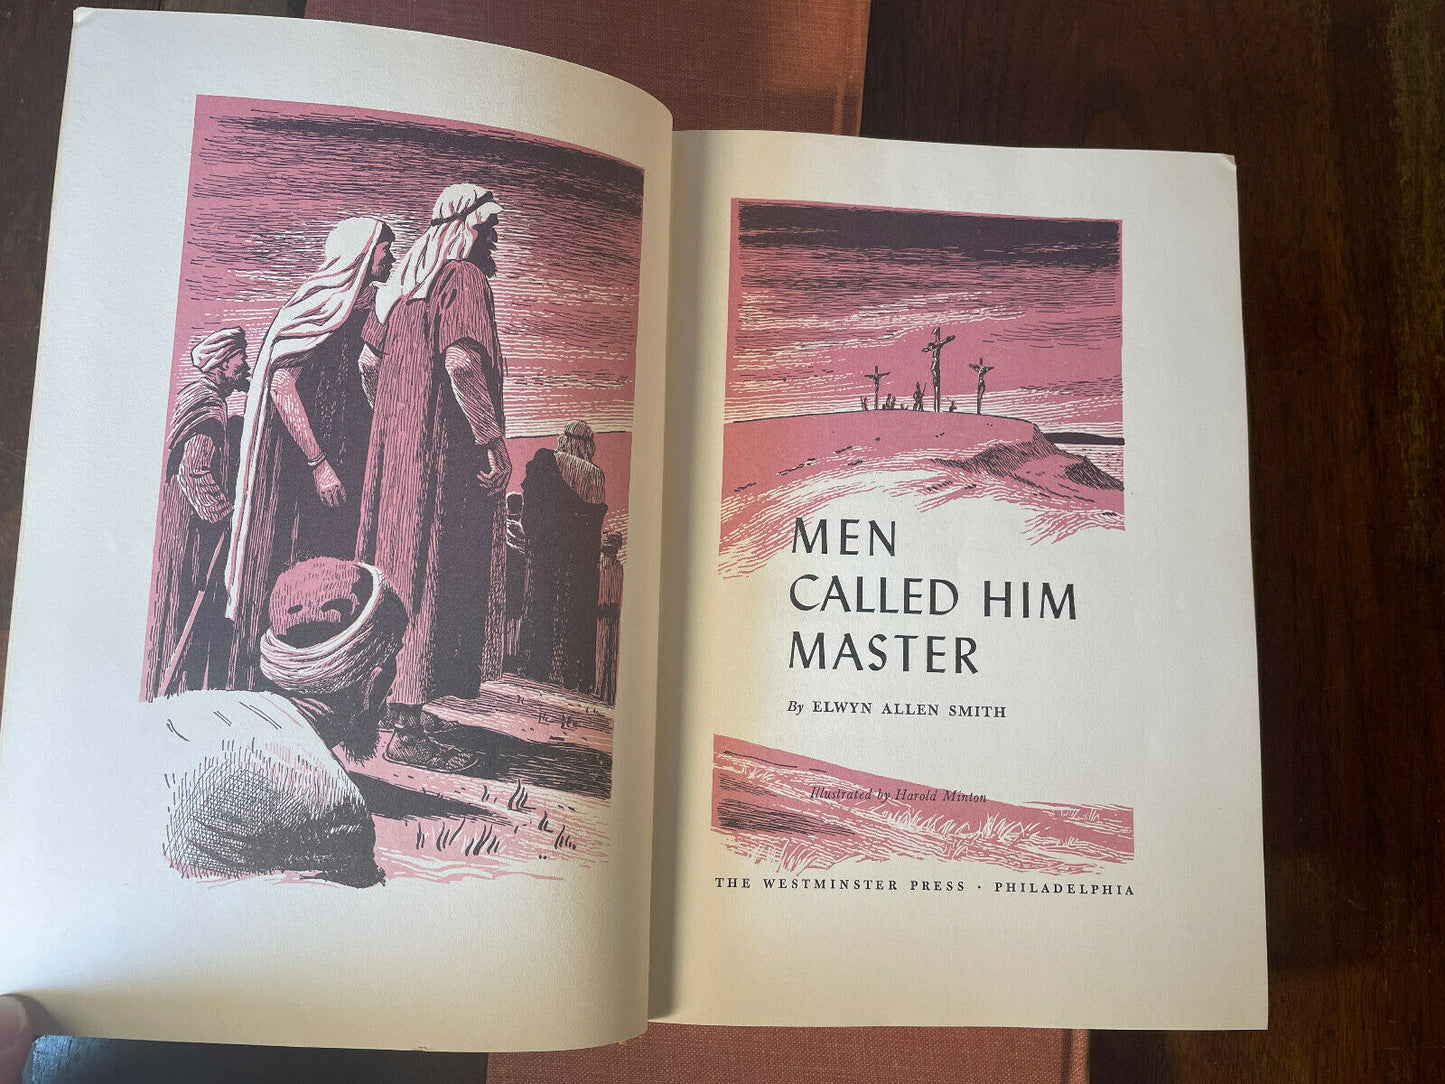 Men Called Him Master, Men of Tomorrow, Kingdom [3 Christian Book Lot]